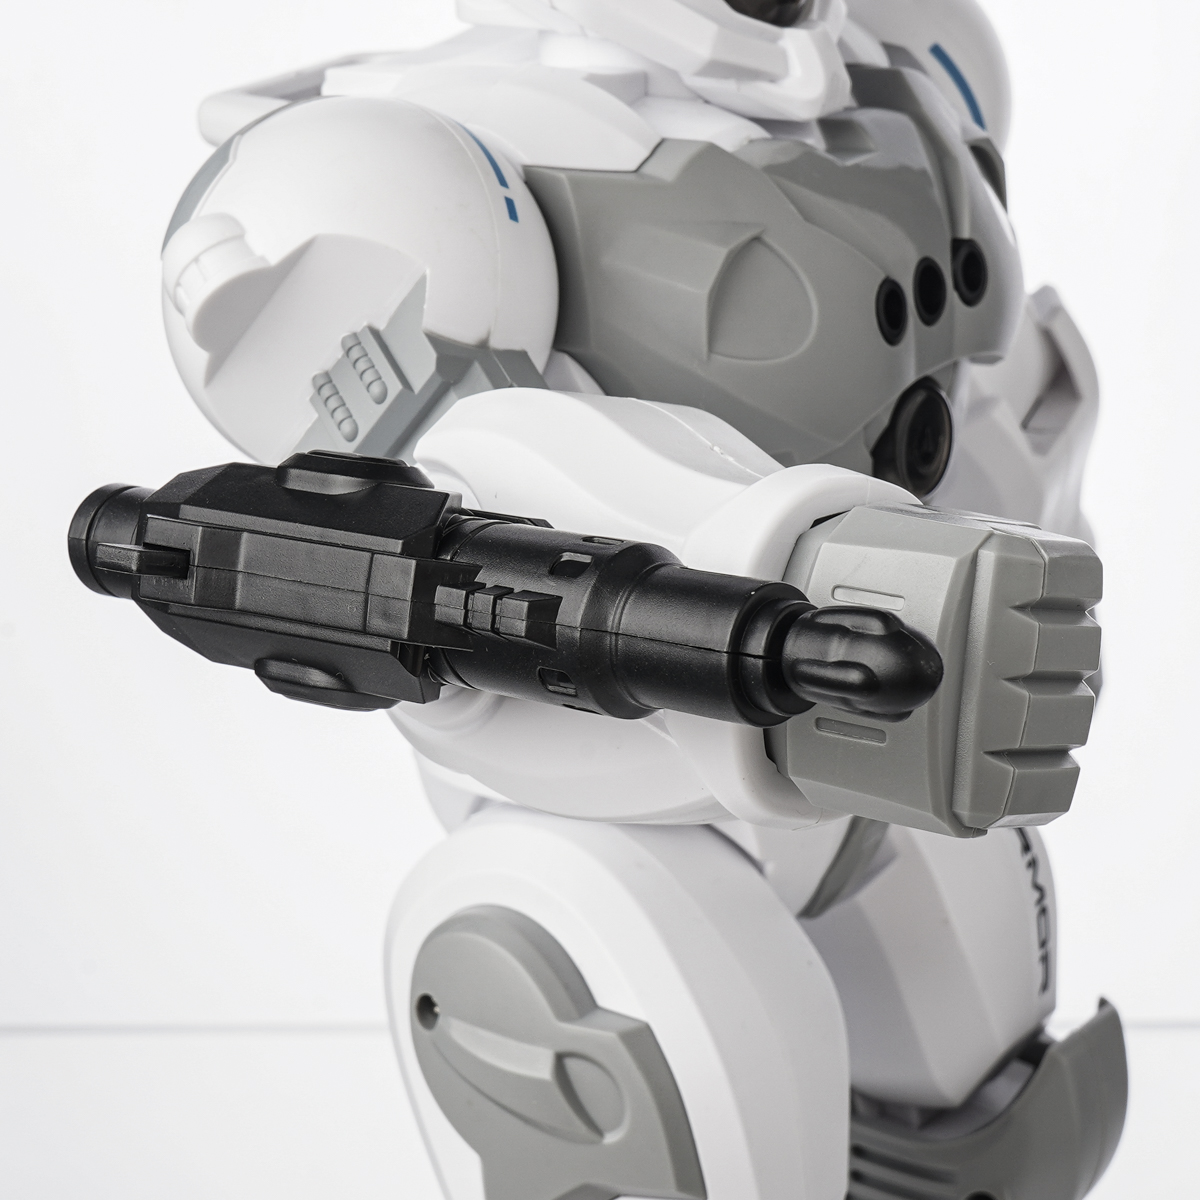 R21-Intelligent-Police-Robot-Gesture-Sensing-Storytelling-USB-charging-RC-Robot-1741209-7